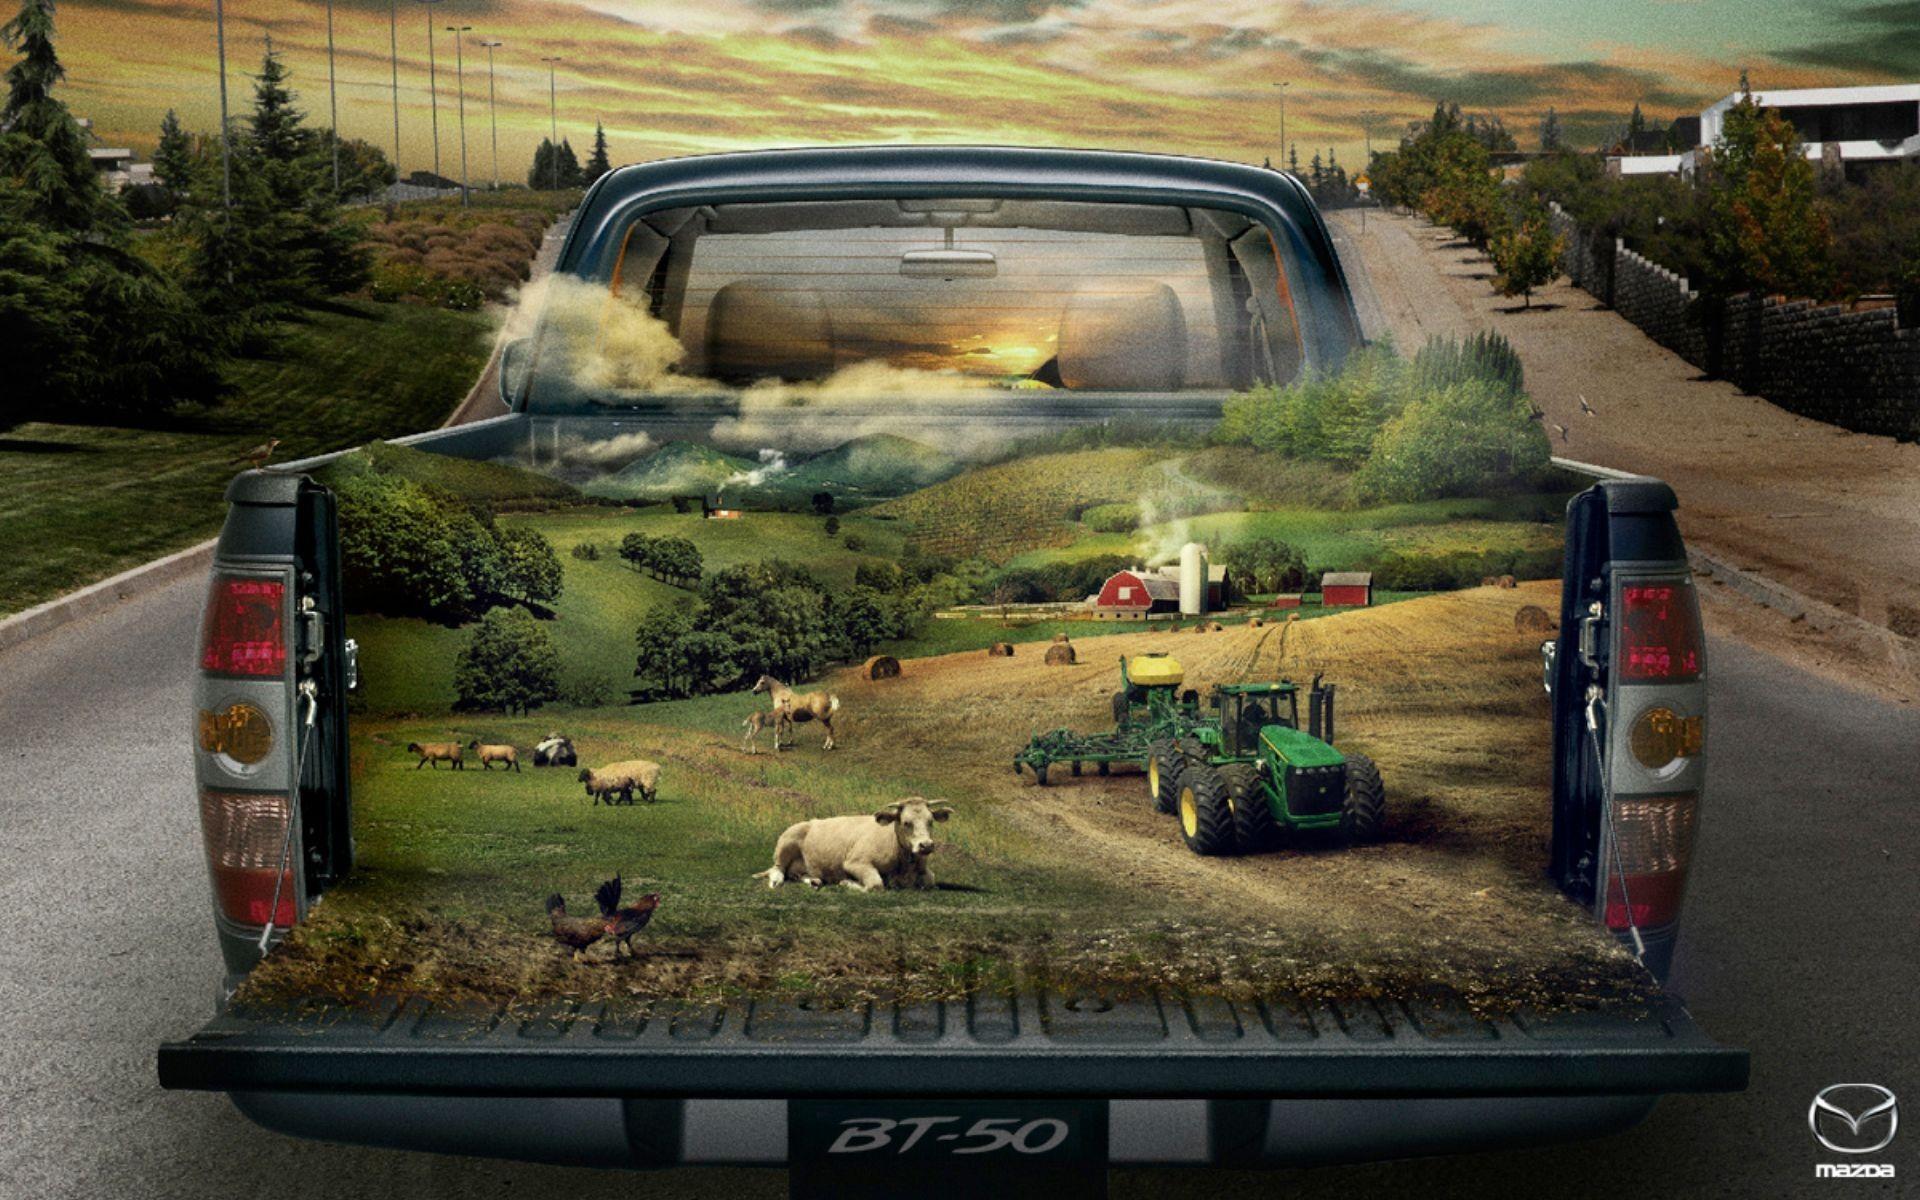 Download the Mazda BT 50 Farm Wallpaper, Mazda BT 50 Farm iPhone